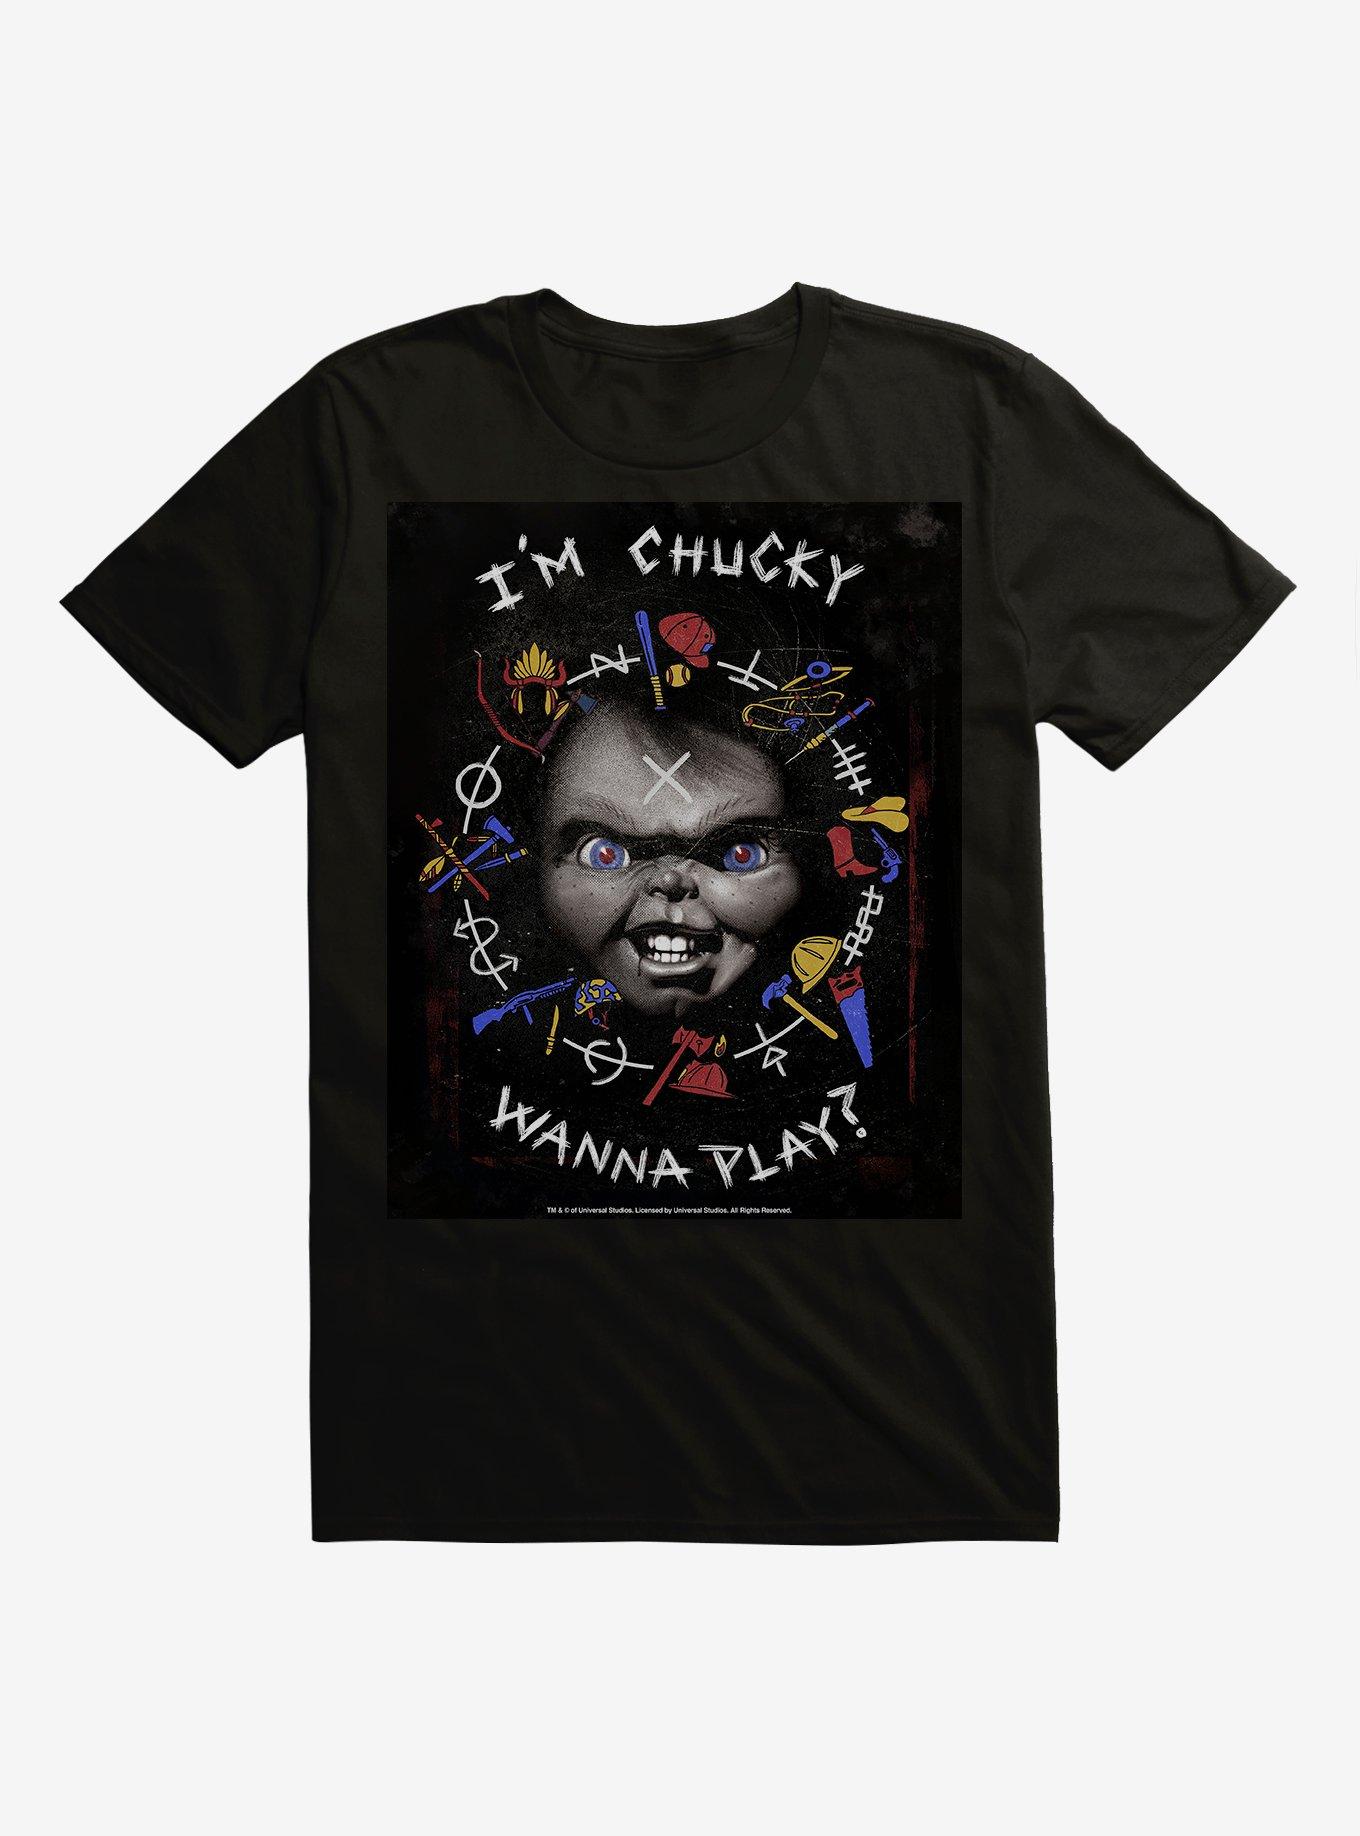 Chucky I'm Wanna Play T-Shirt